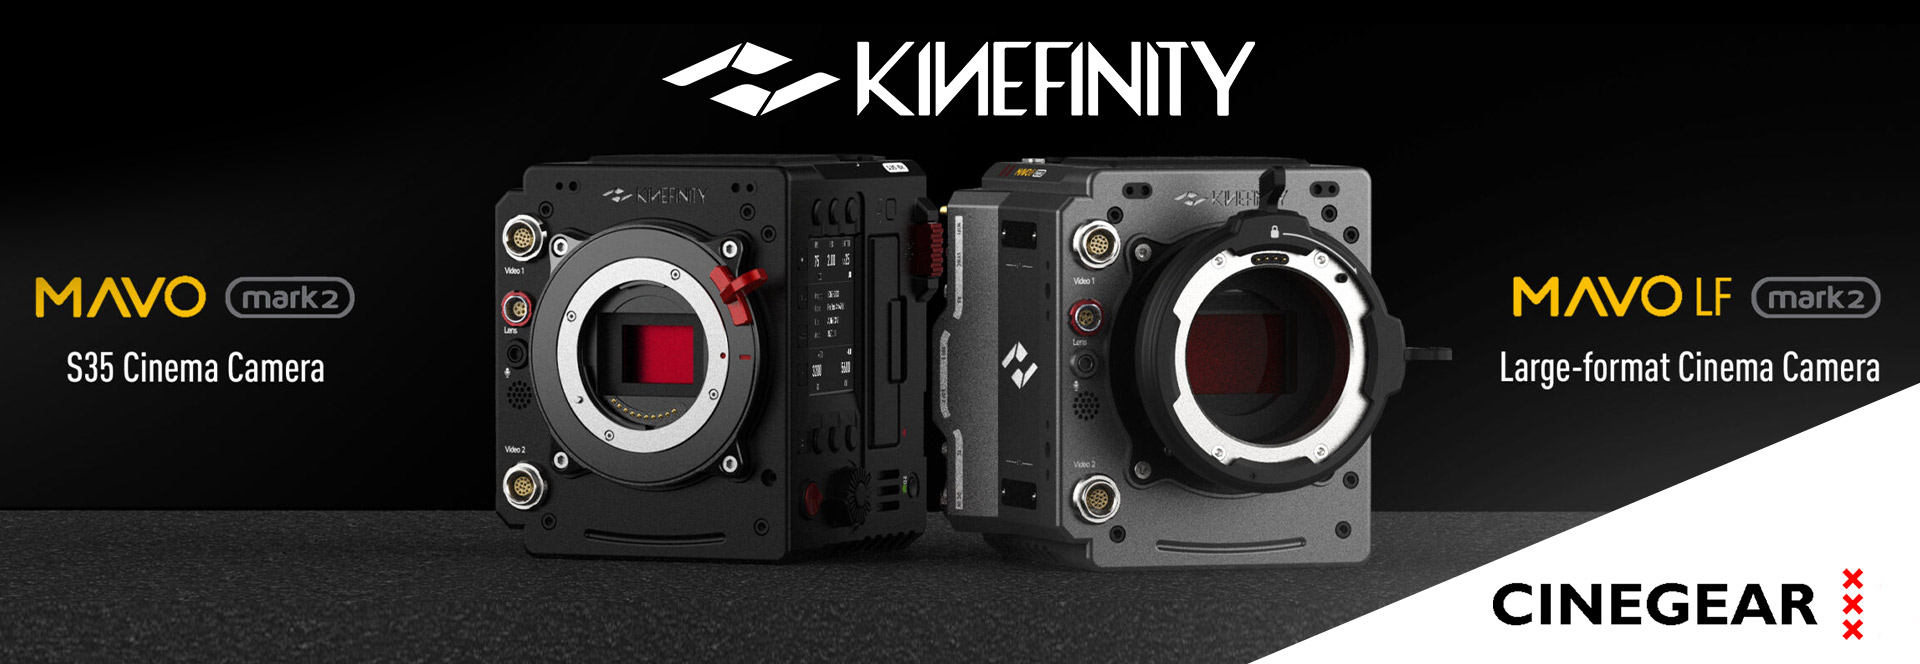 Kinefinity Cinema Camera